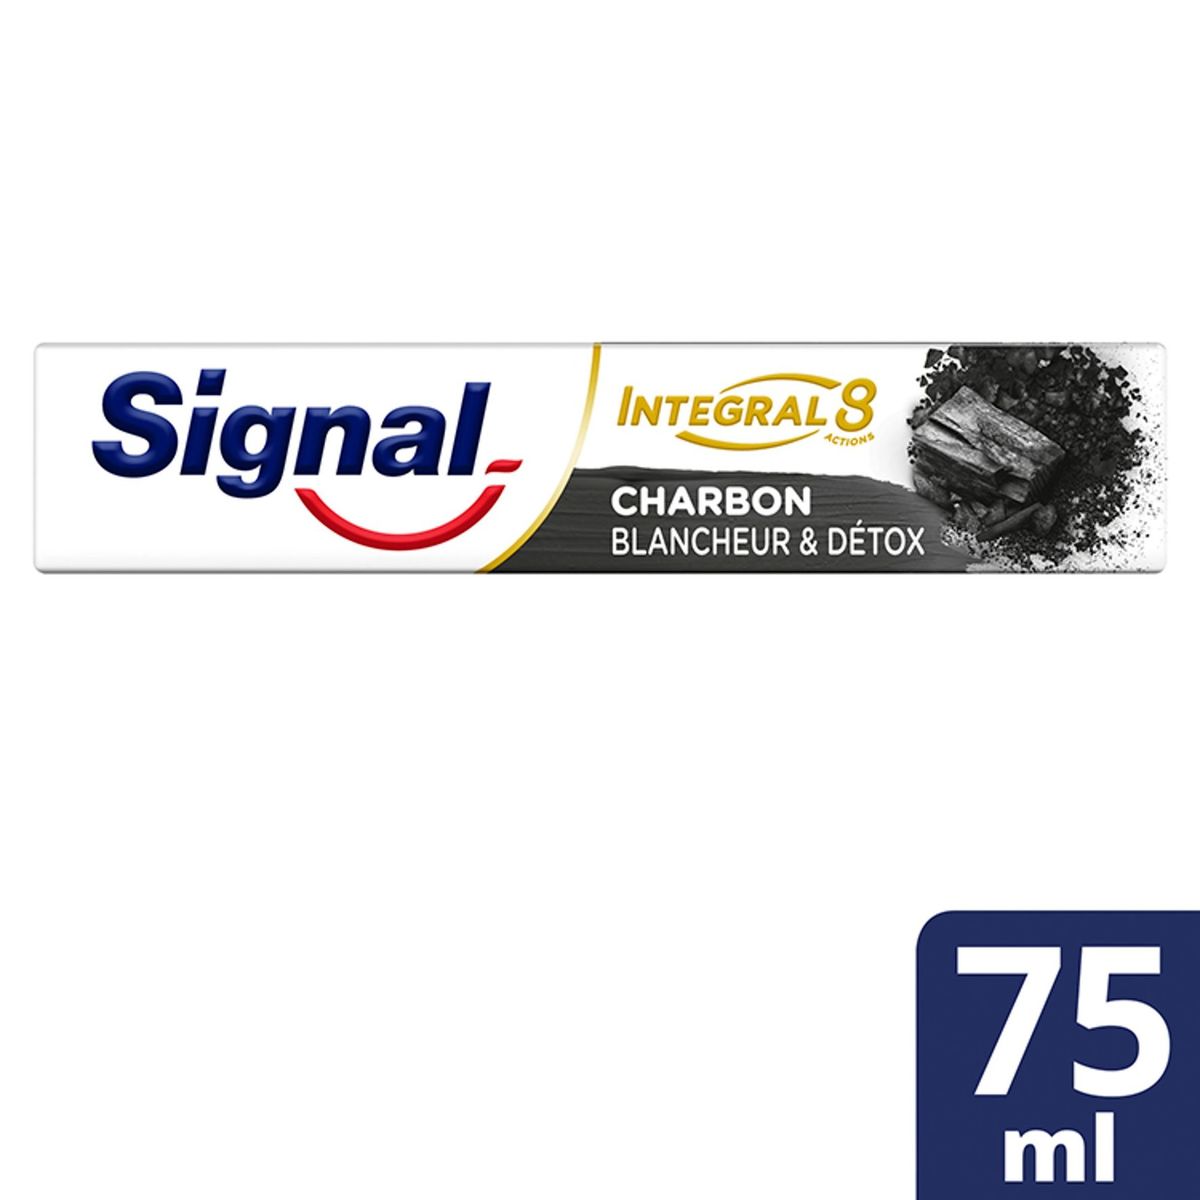 Signal Integral 8 Nature Elements Dentifrice Charbon 75 ml